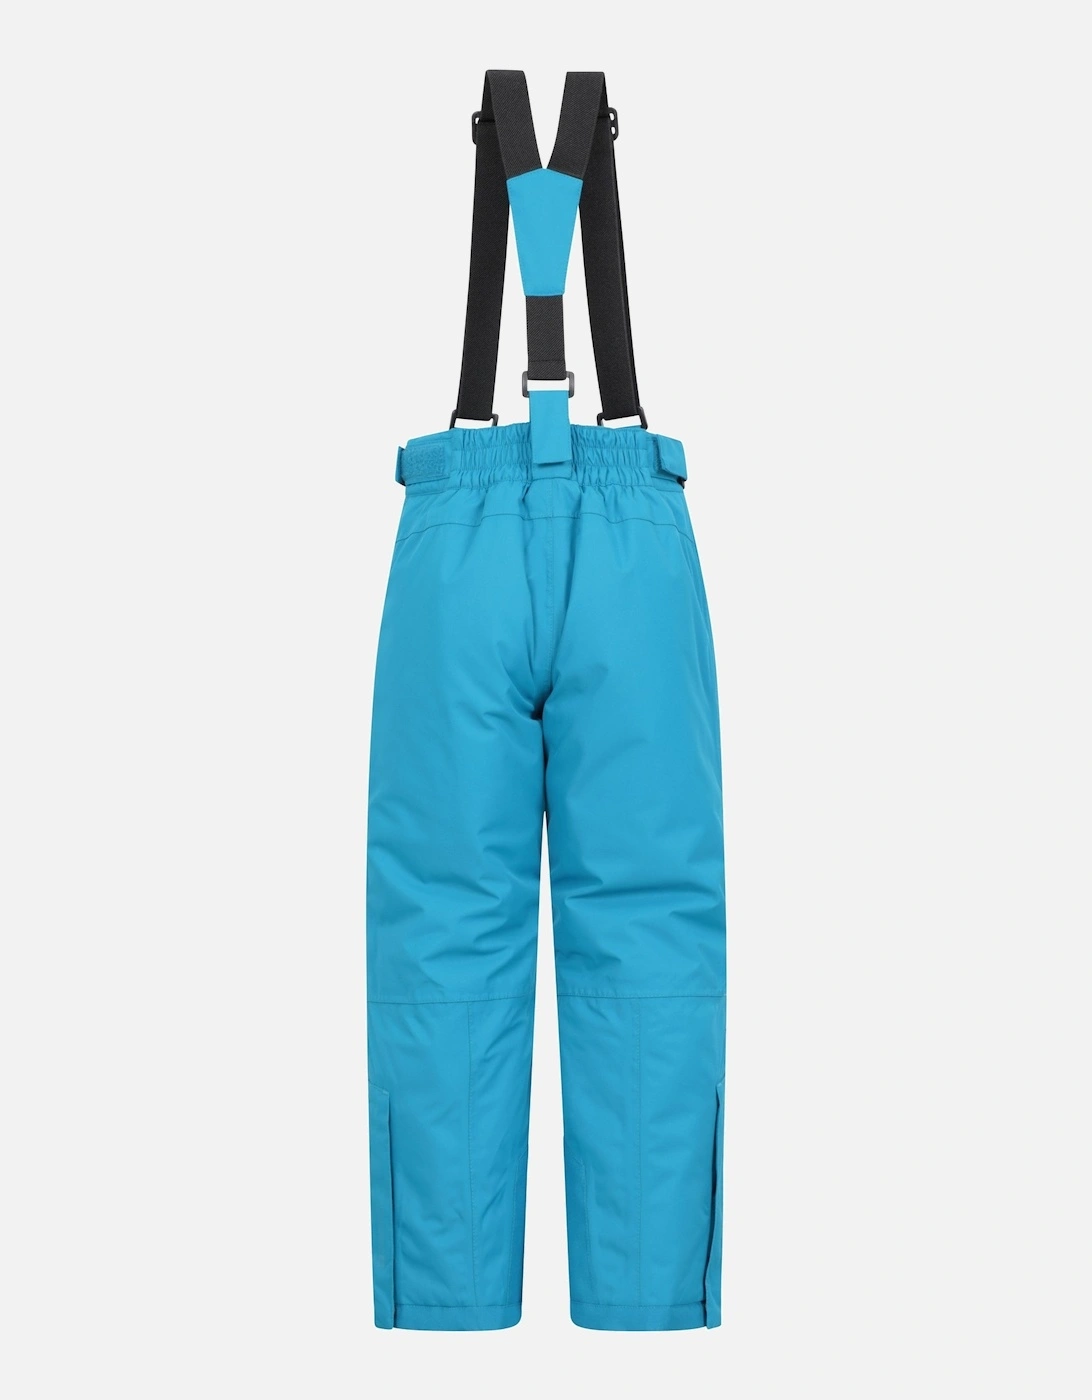 Childrens/Kids Falcon Extreme Ski Trousers